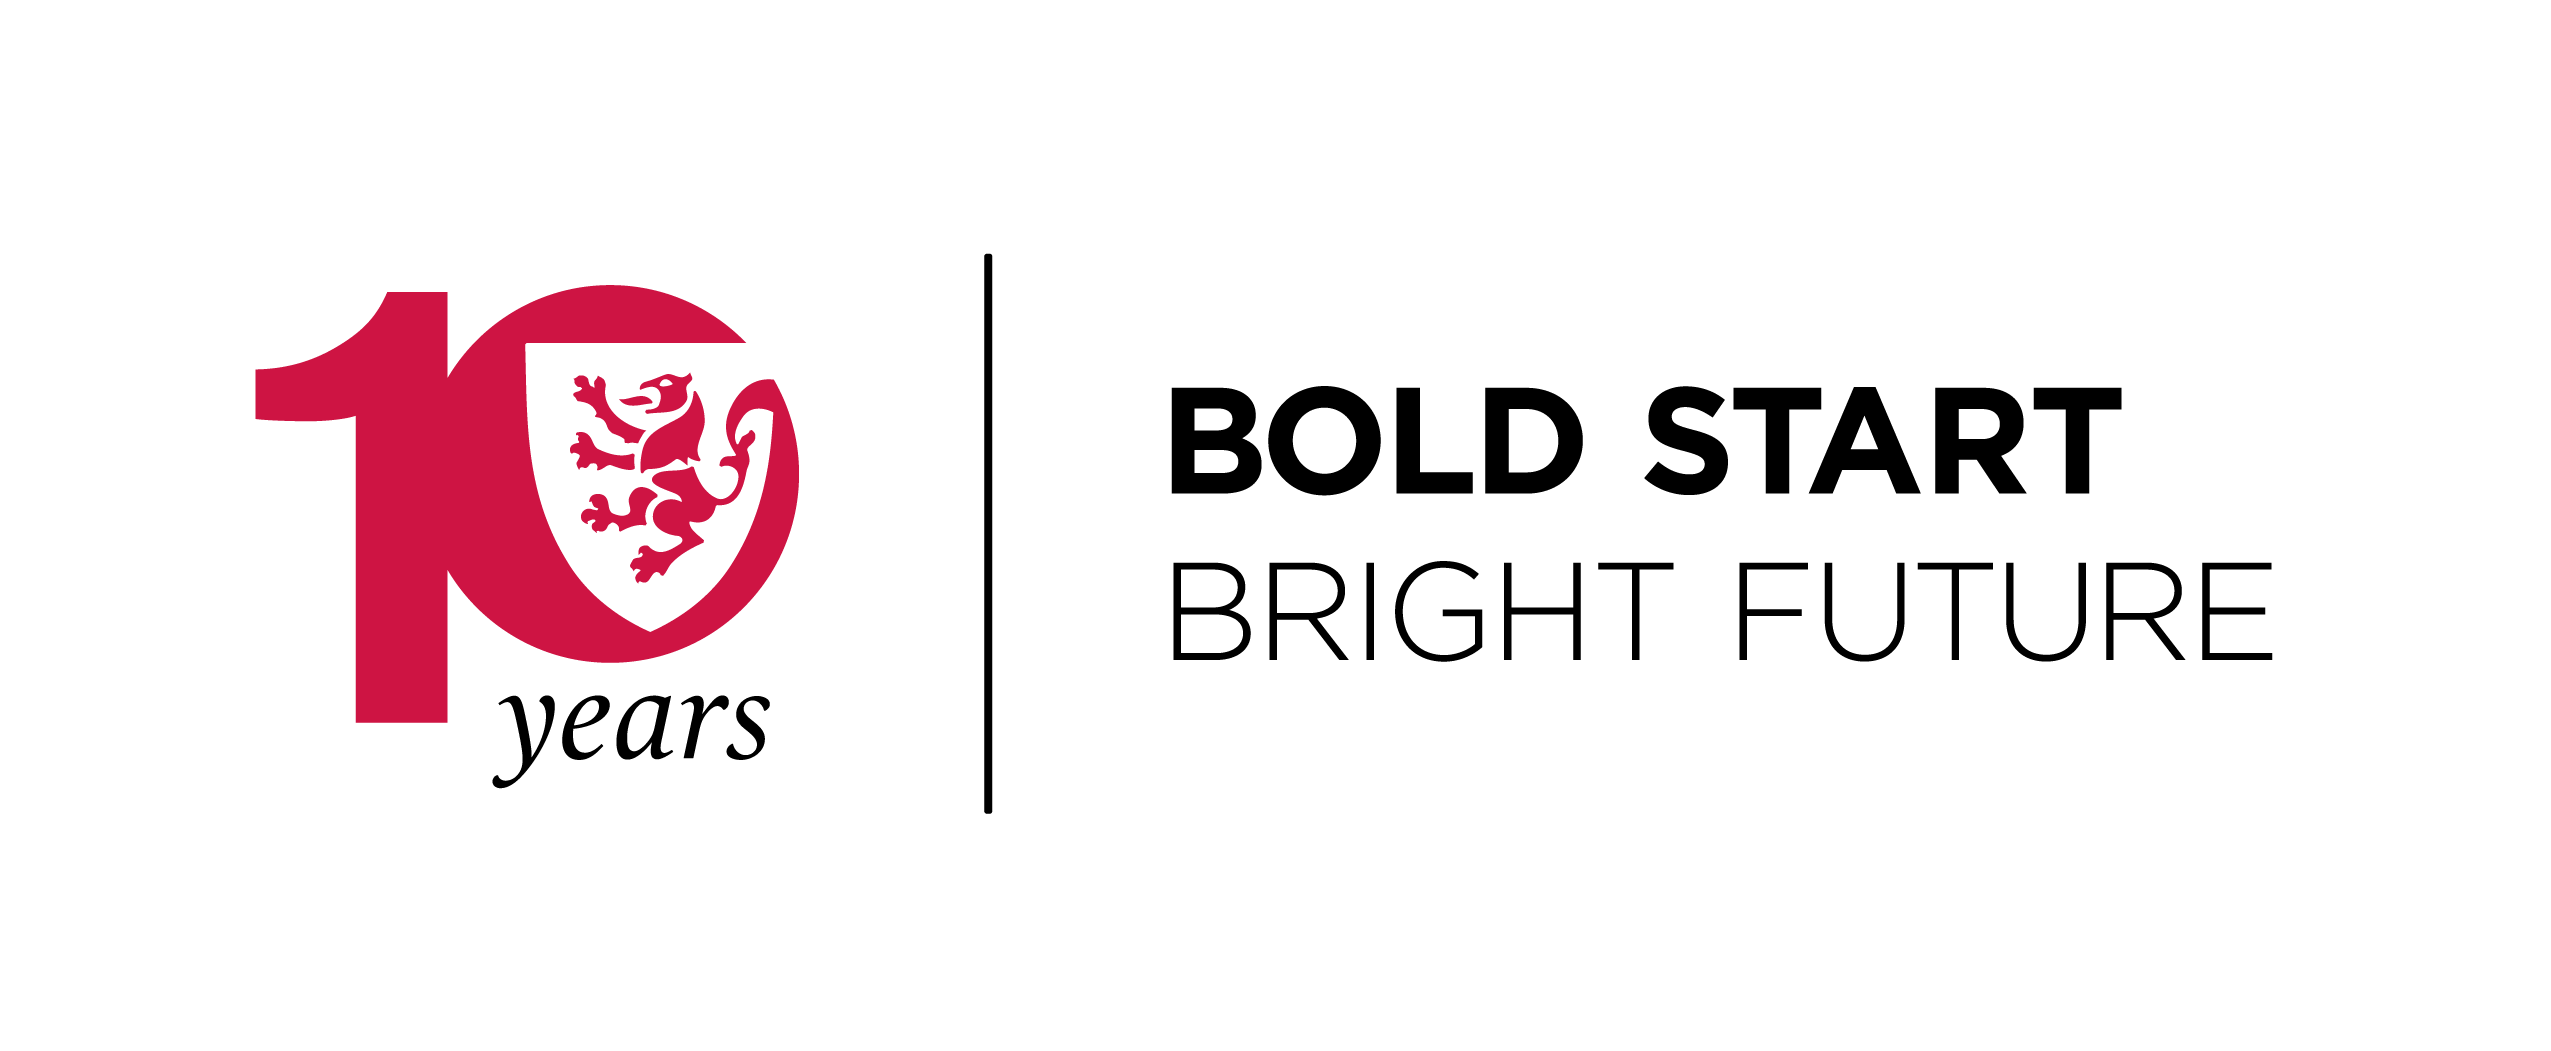 Bold start bright future slogan